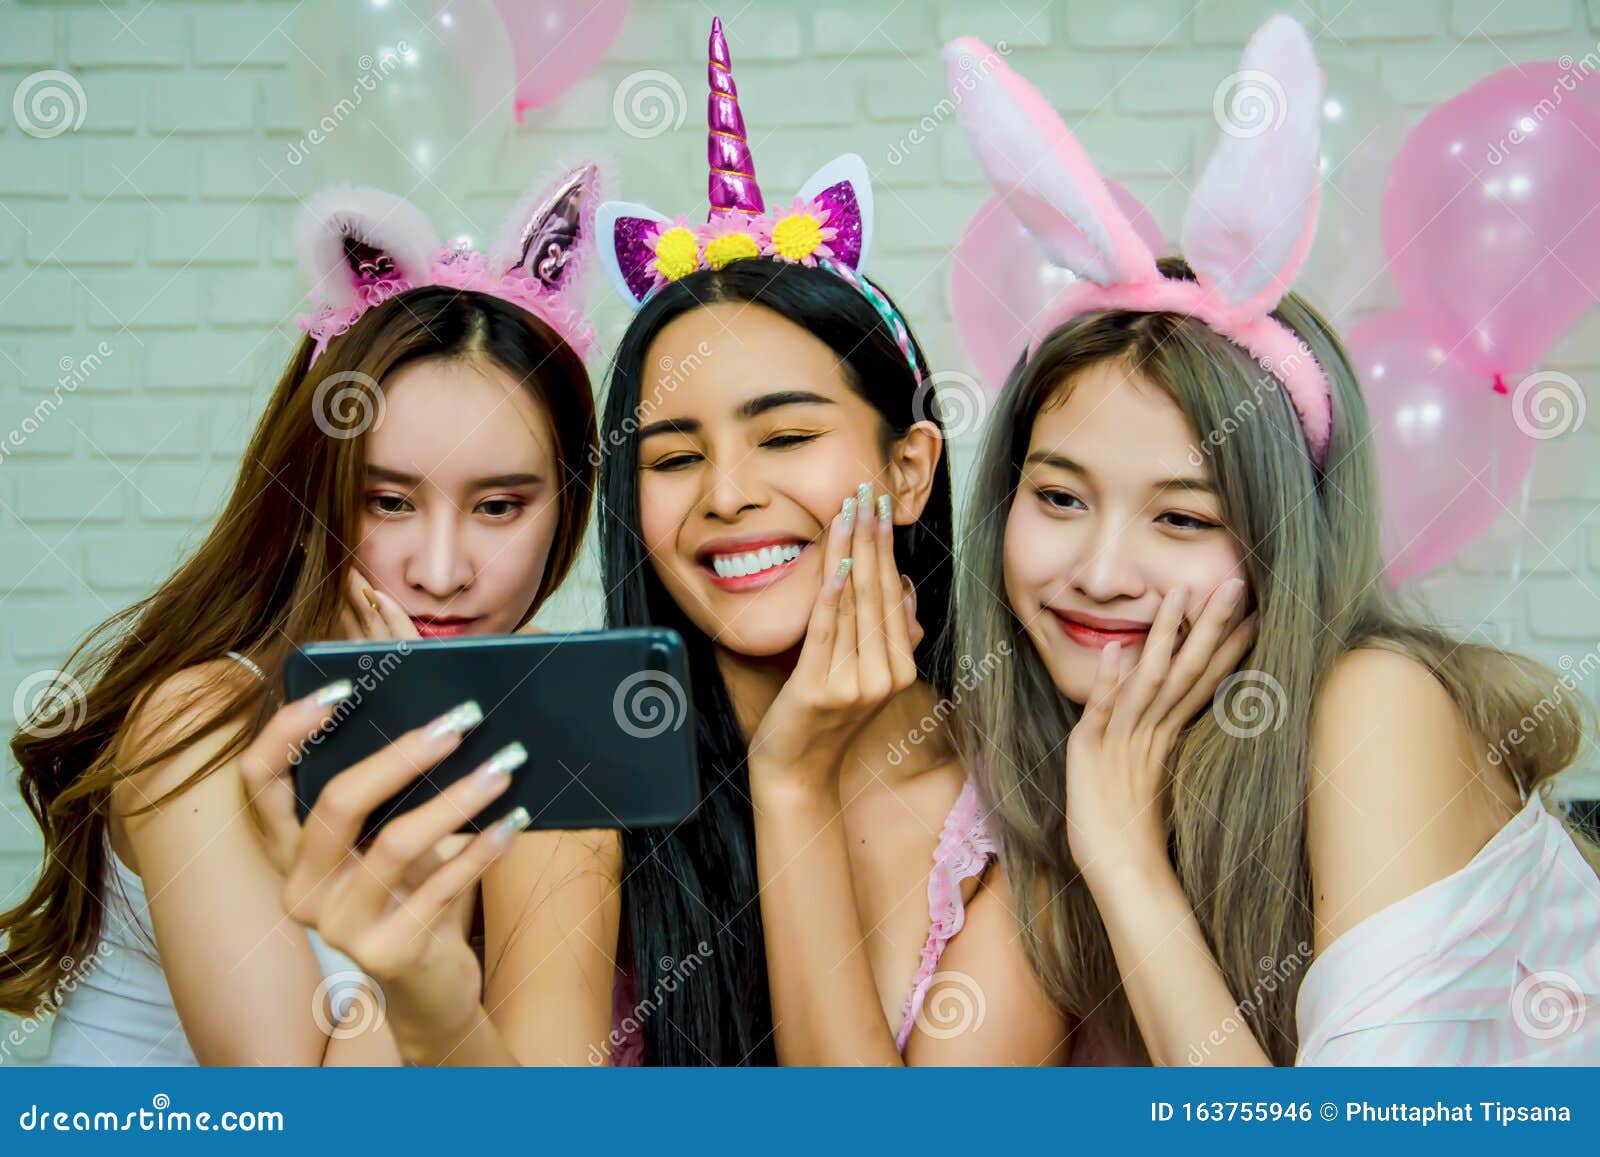 hottest group selfie